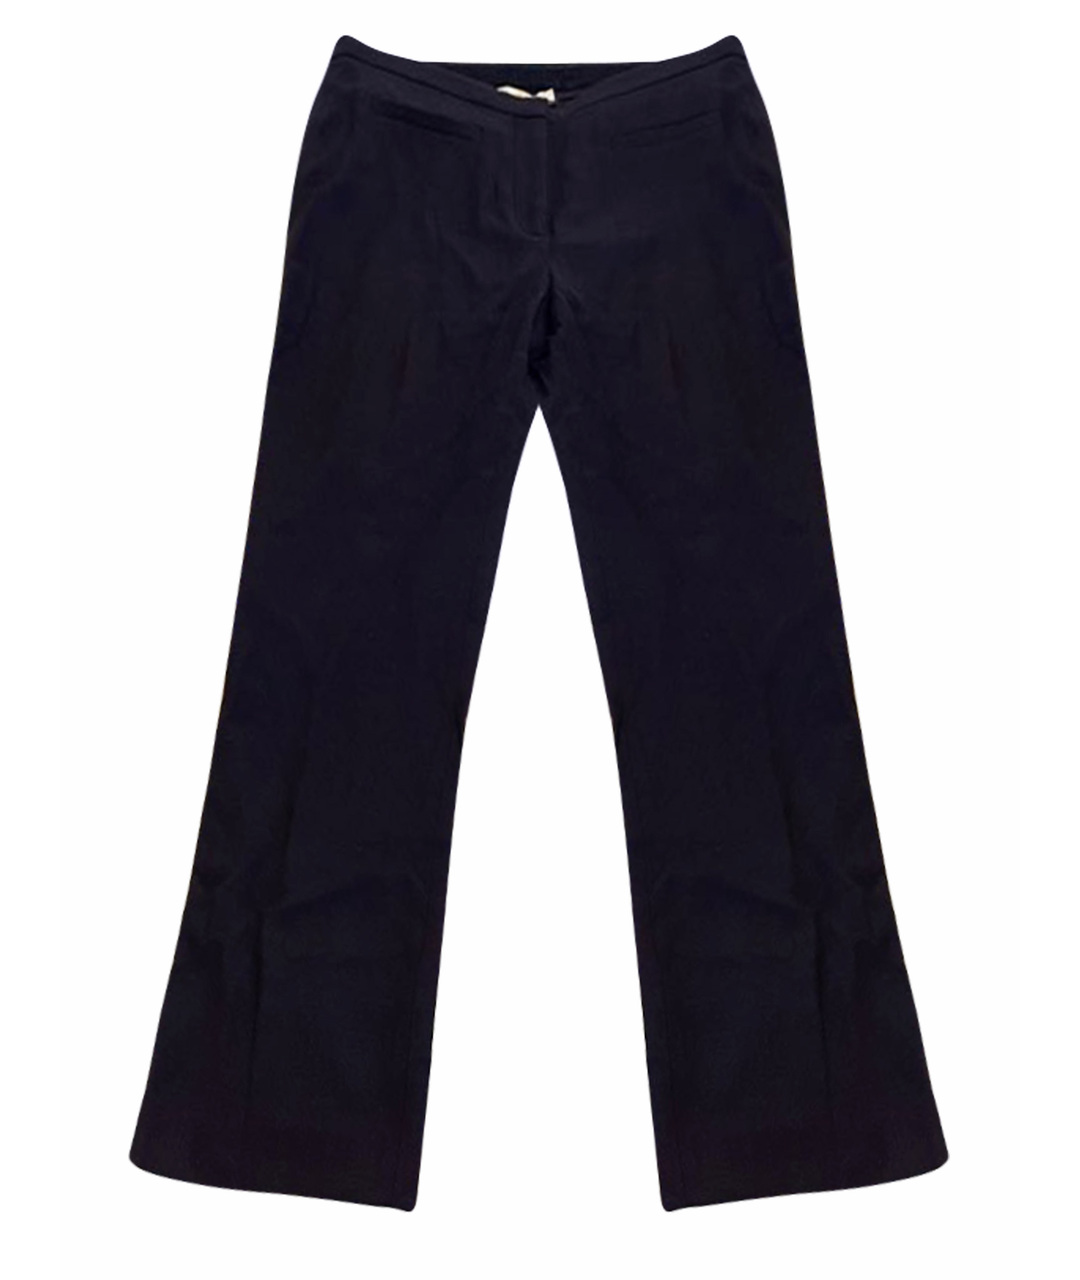 TORY BURCH Темно-синие шерстяные брюки широкие, фото 1